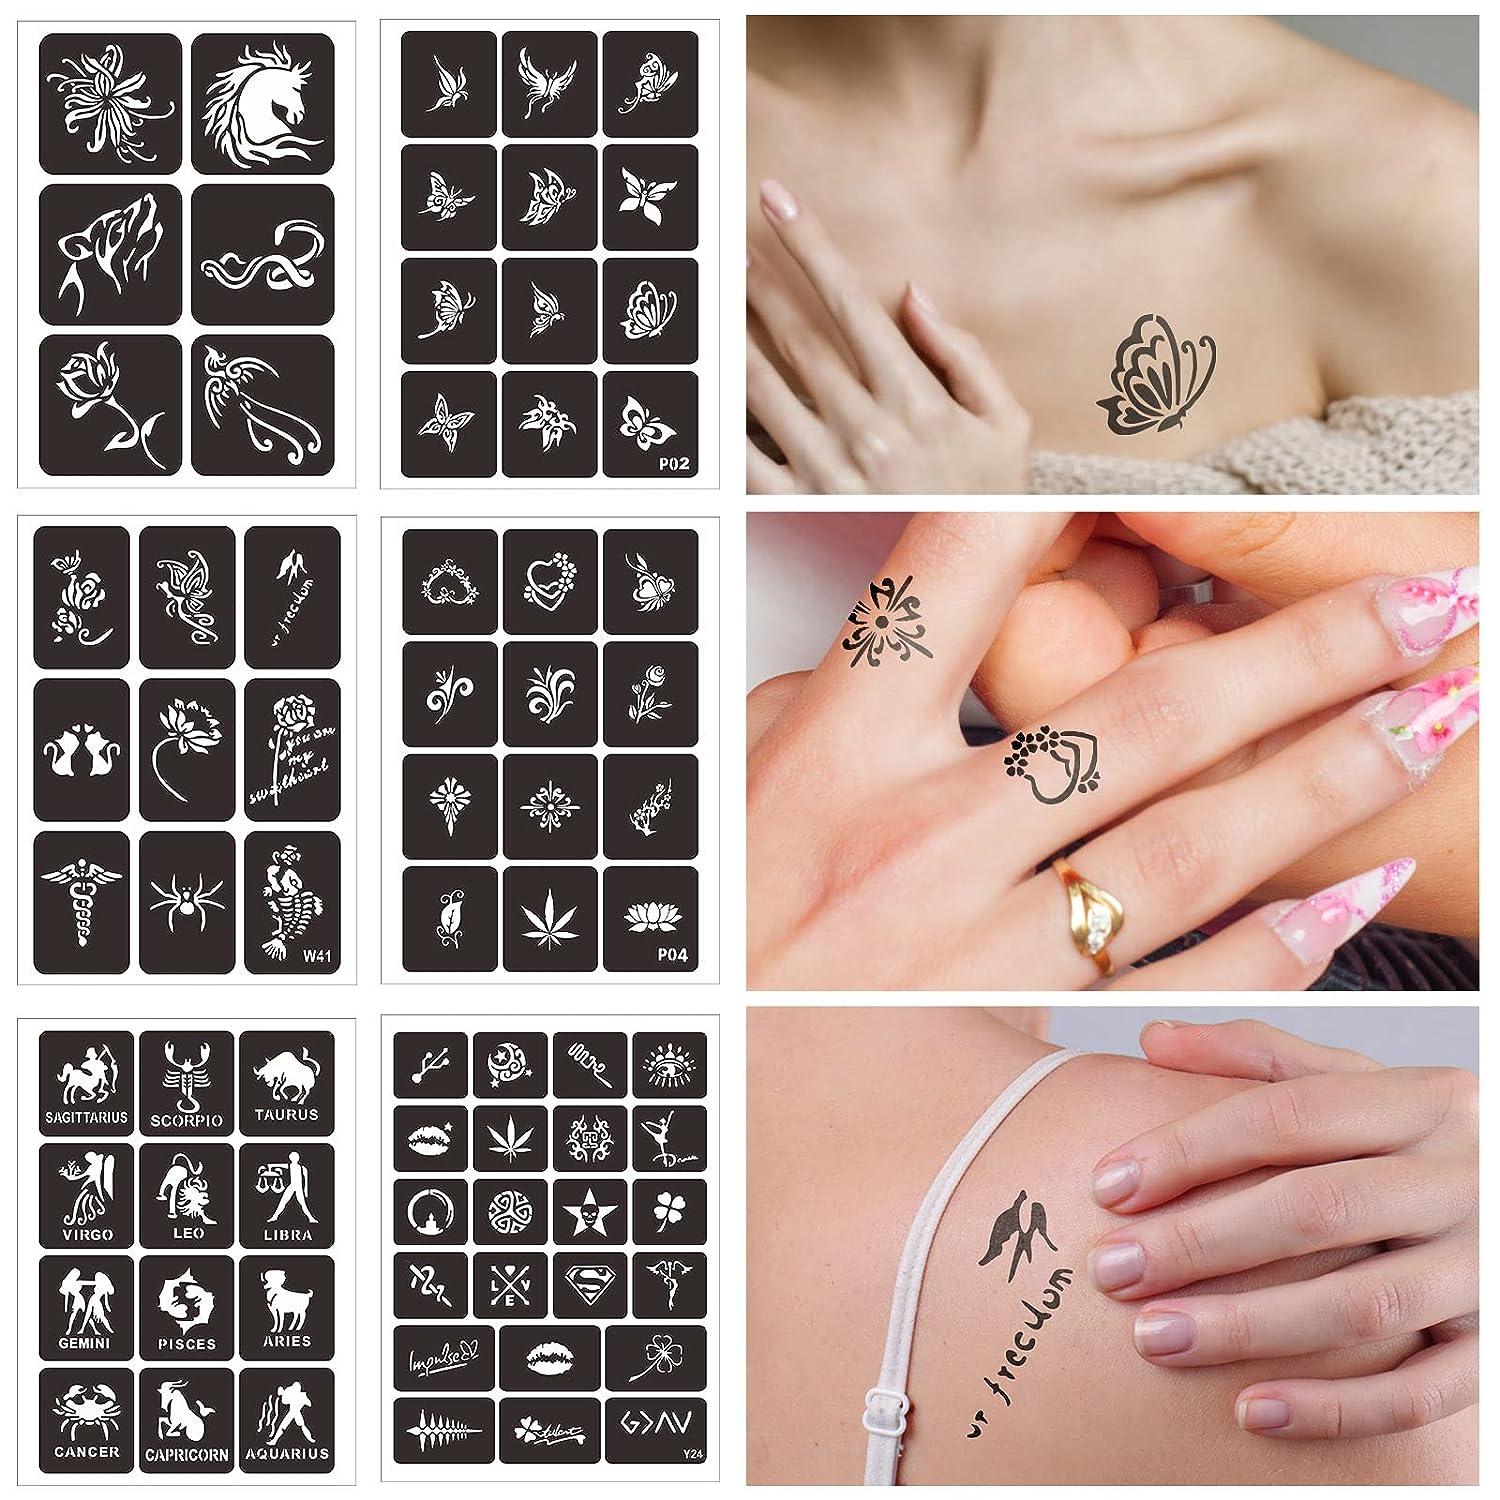 Aquarius Zodiac Symbol Temporary Tattoo (Set of 3) – Small Tattoos